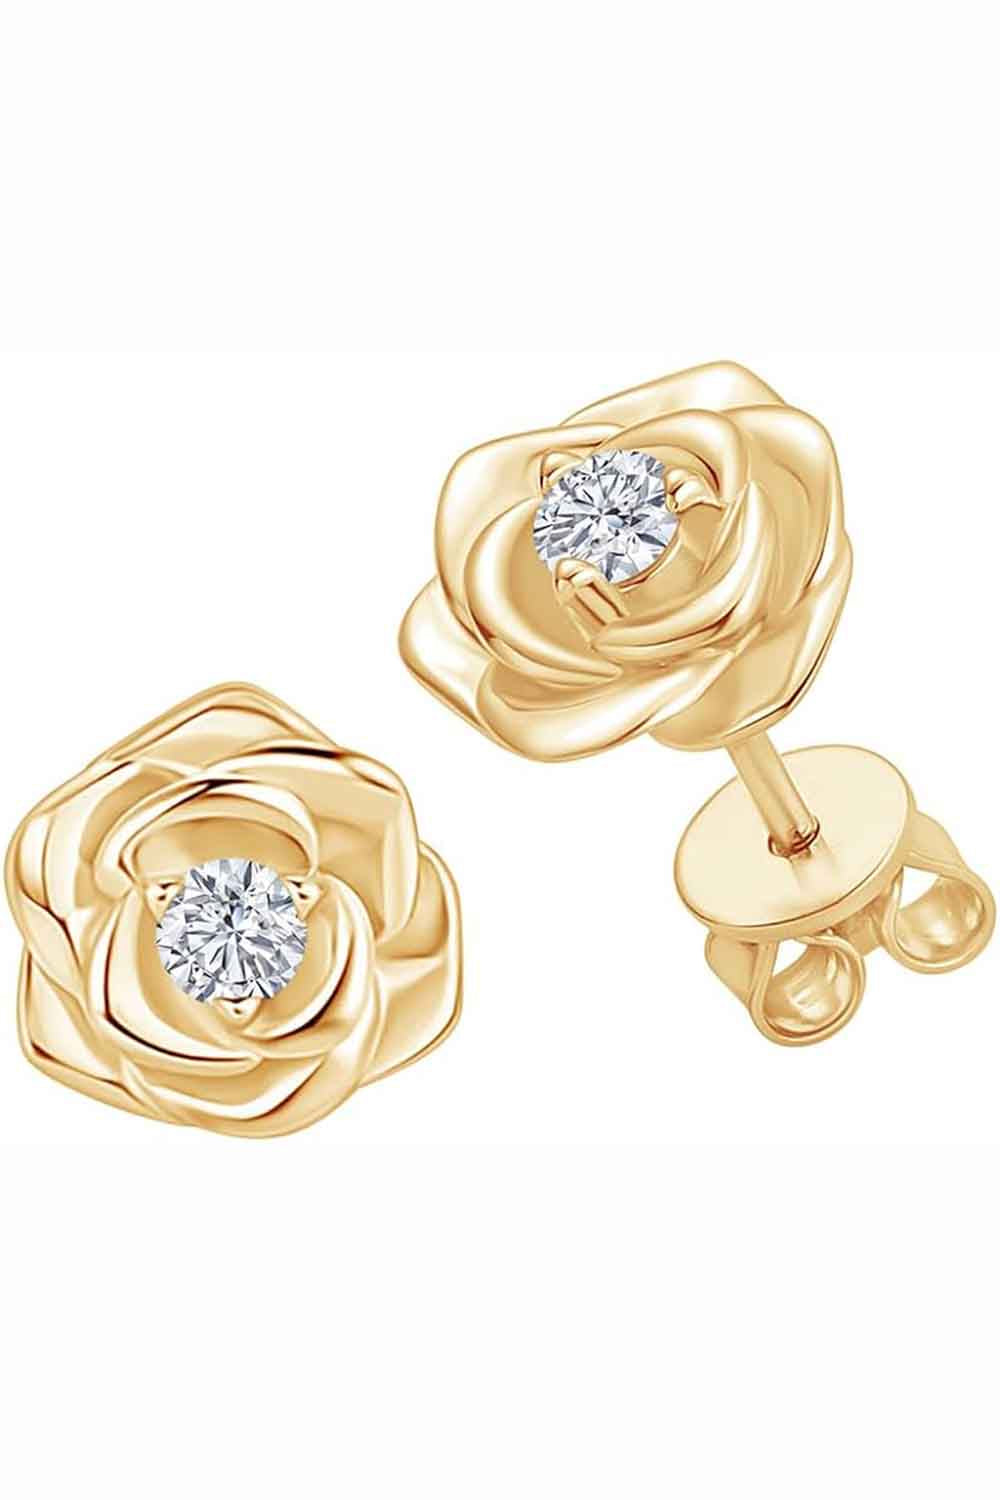 Yellow Gold Color Rose Flower Stud Earrings, Stud Earrings for Women